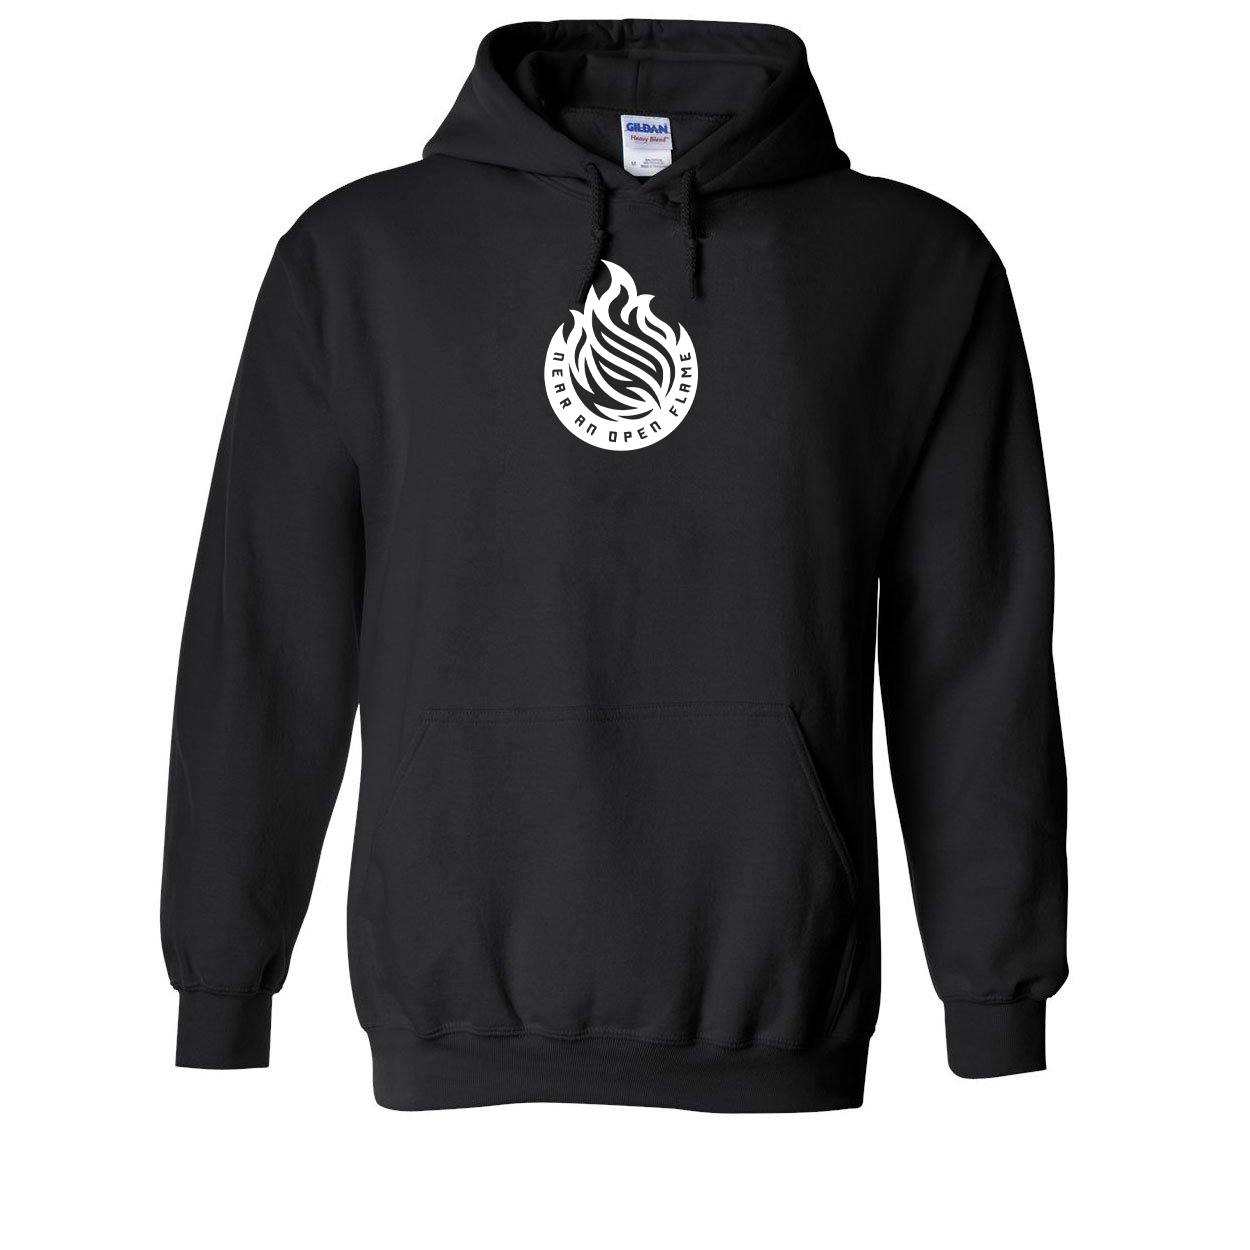 Near An Open Flame Classic Sweatshirt Black (White Logo)